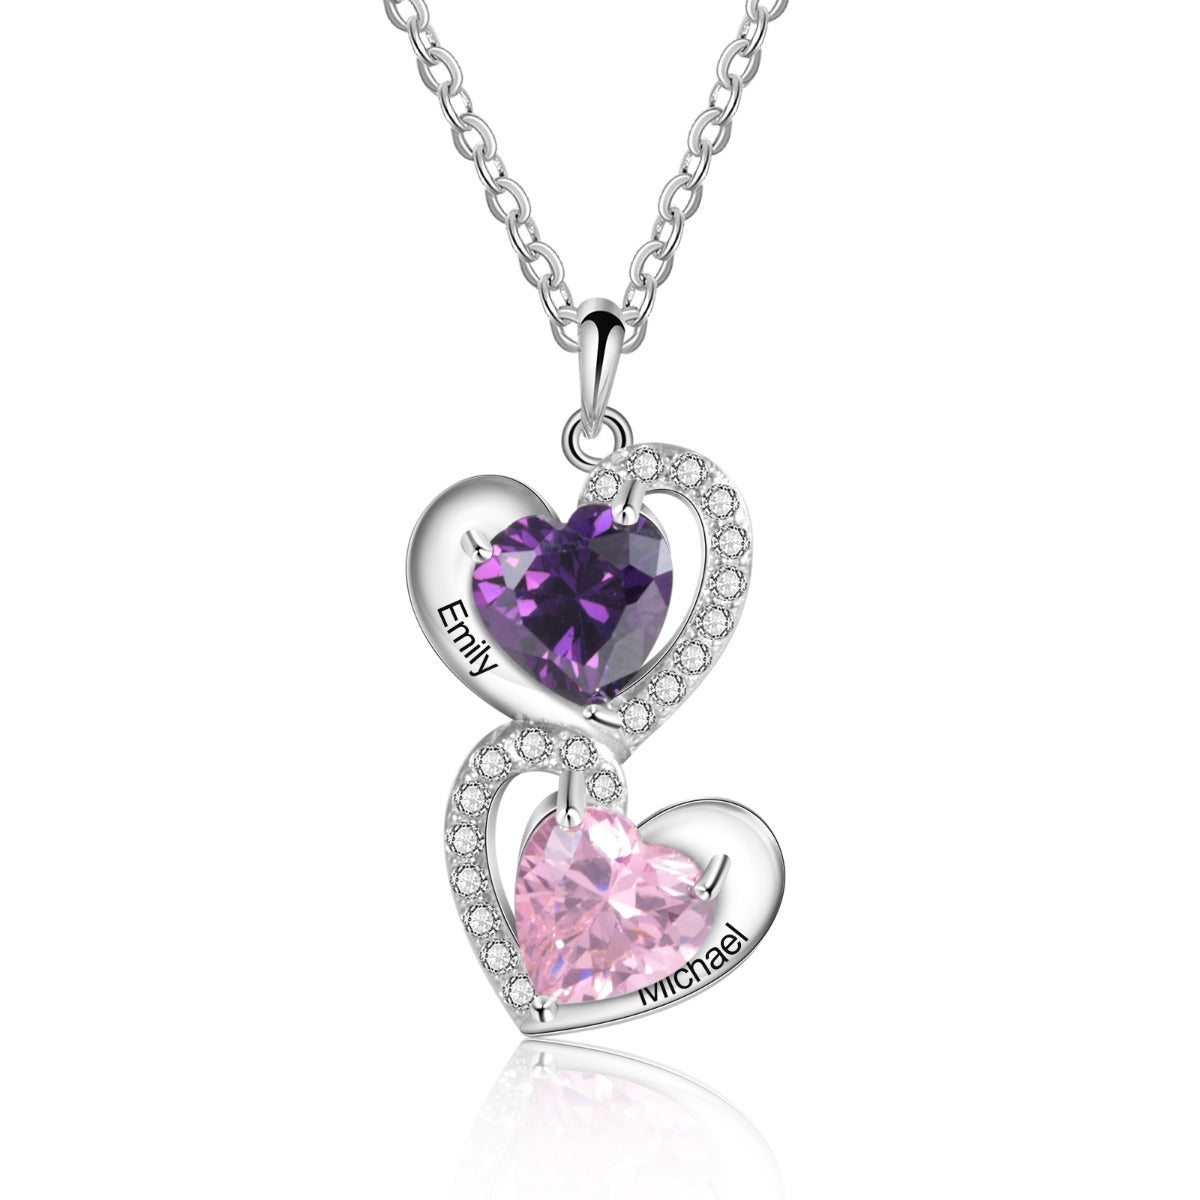 S925 Silver Heart Shape CZ Necklace